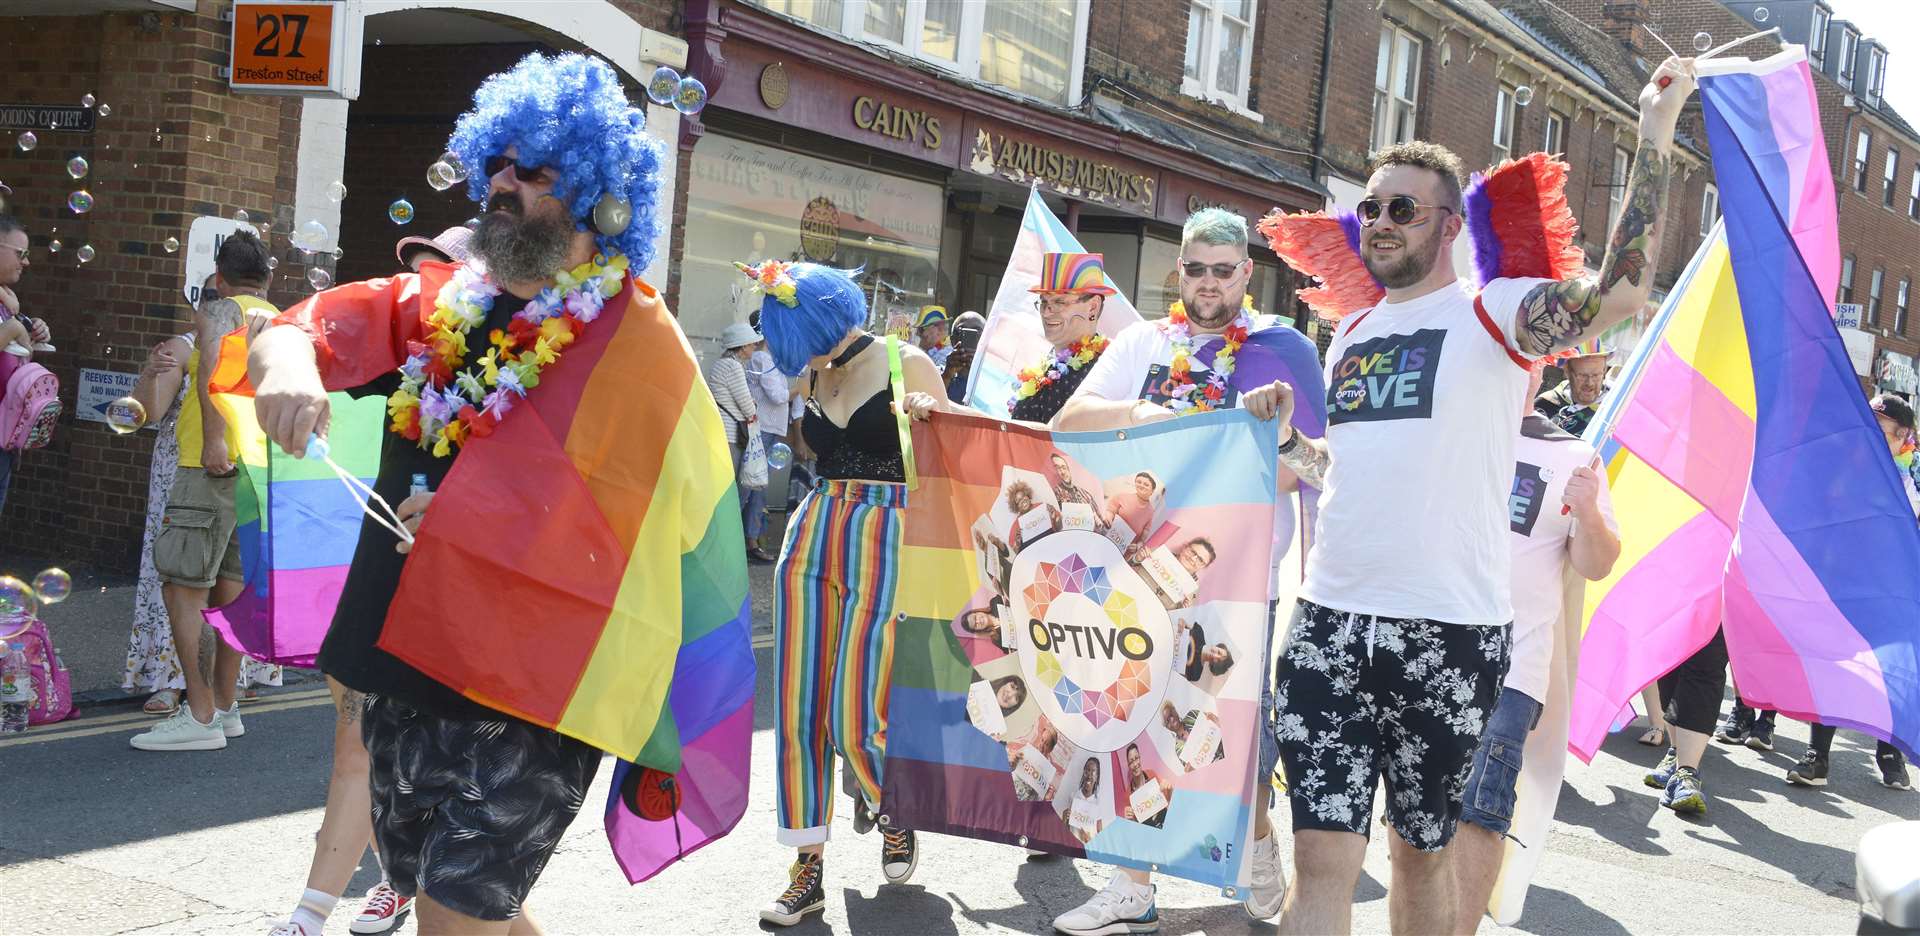 Swale Pride 2019 goes through Preston Street in Faversham. Picture: Paul Amos